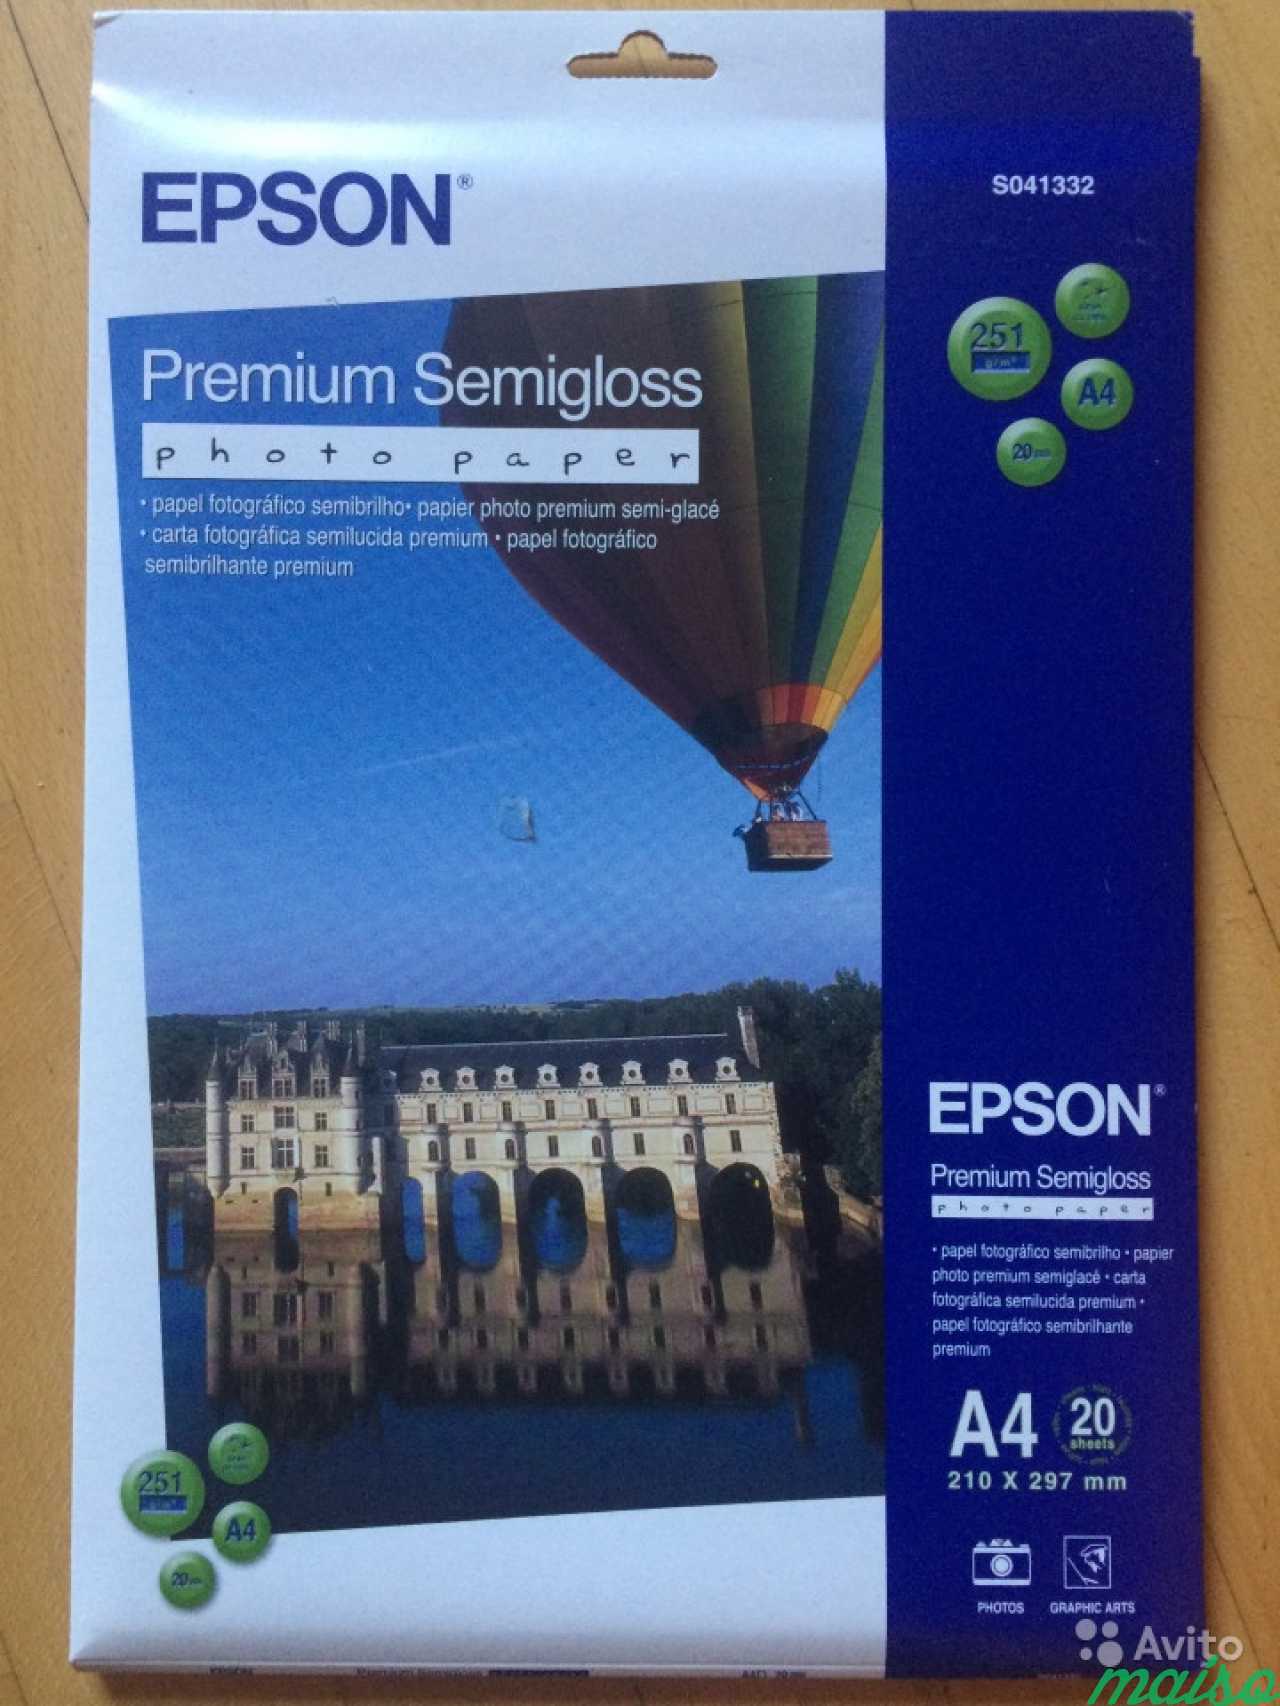 Epson полуглянцевая фотобумага А4 в Санкт-Петербурге. Фото 1